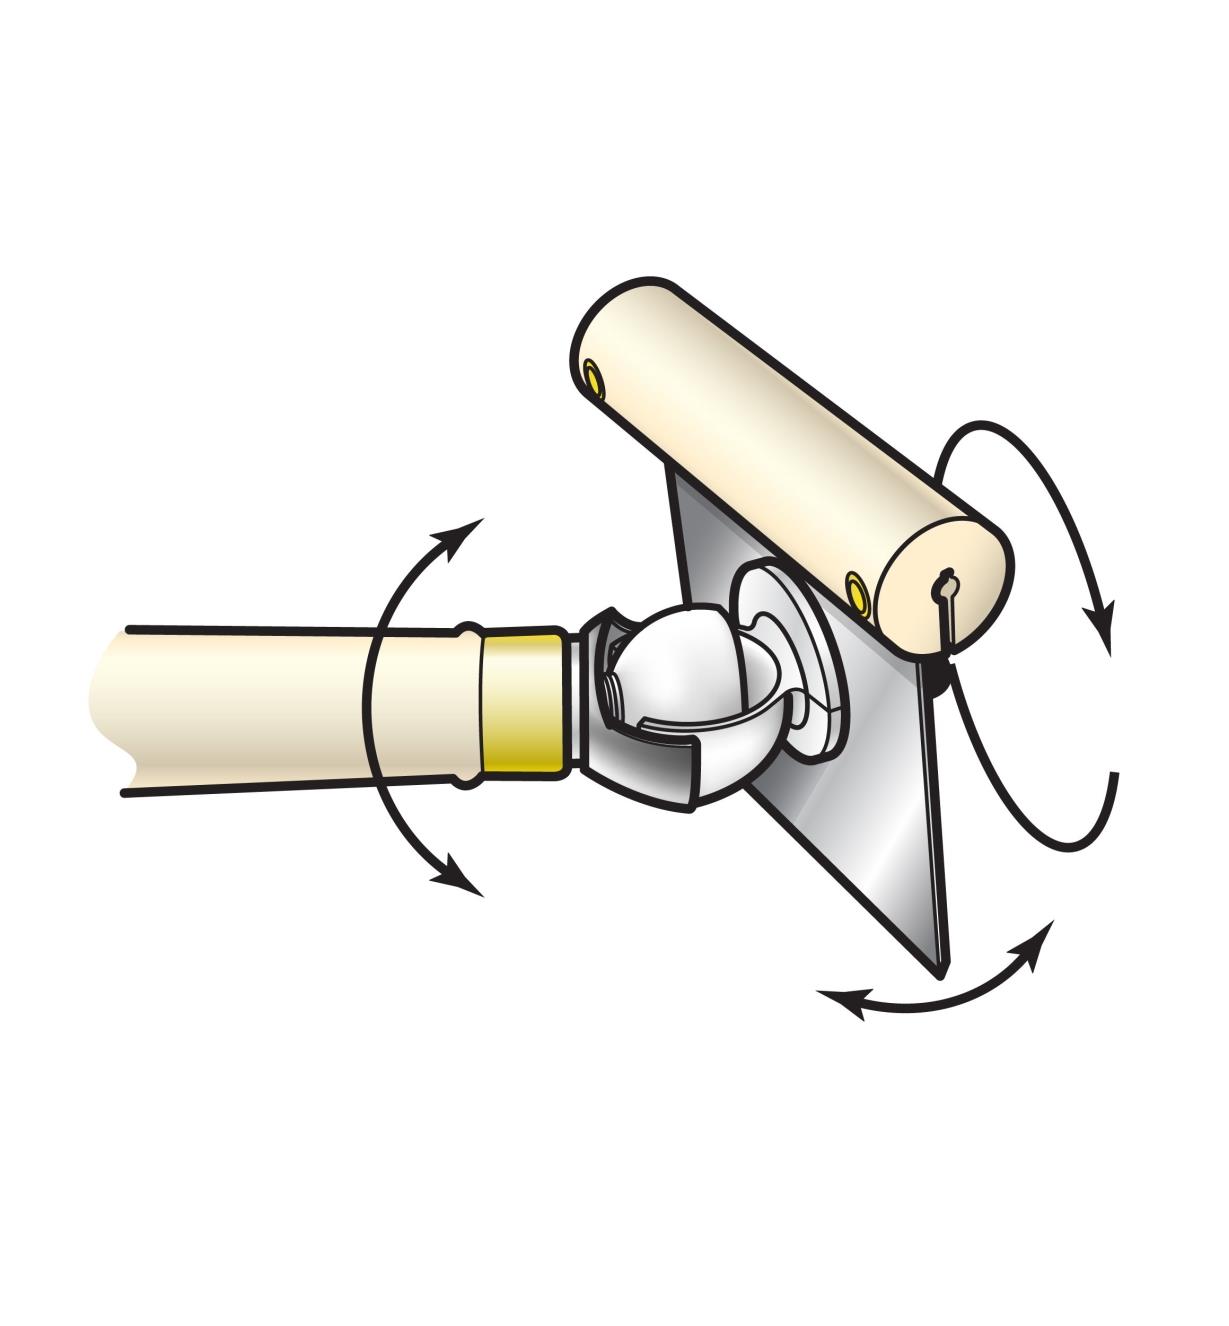 Illustration showing adjustable orientation of ball joint